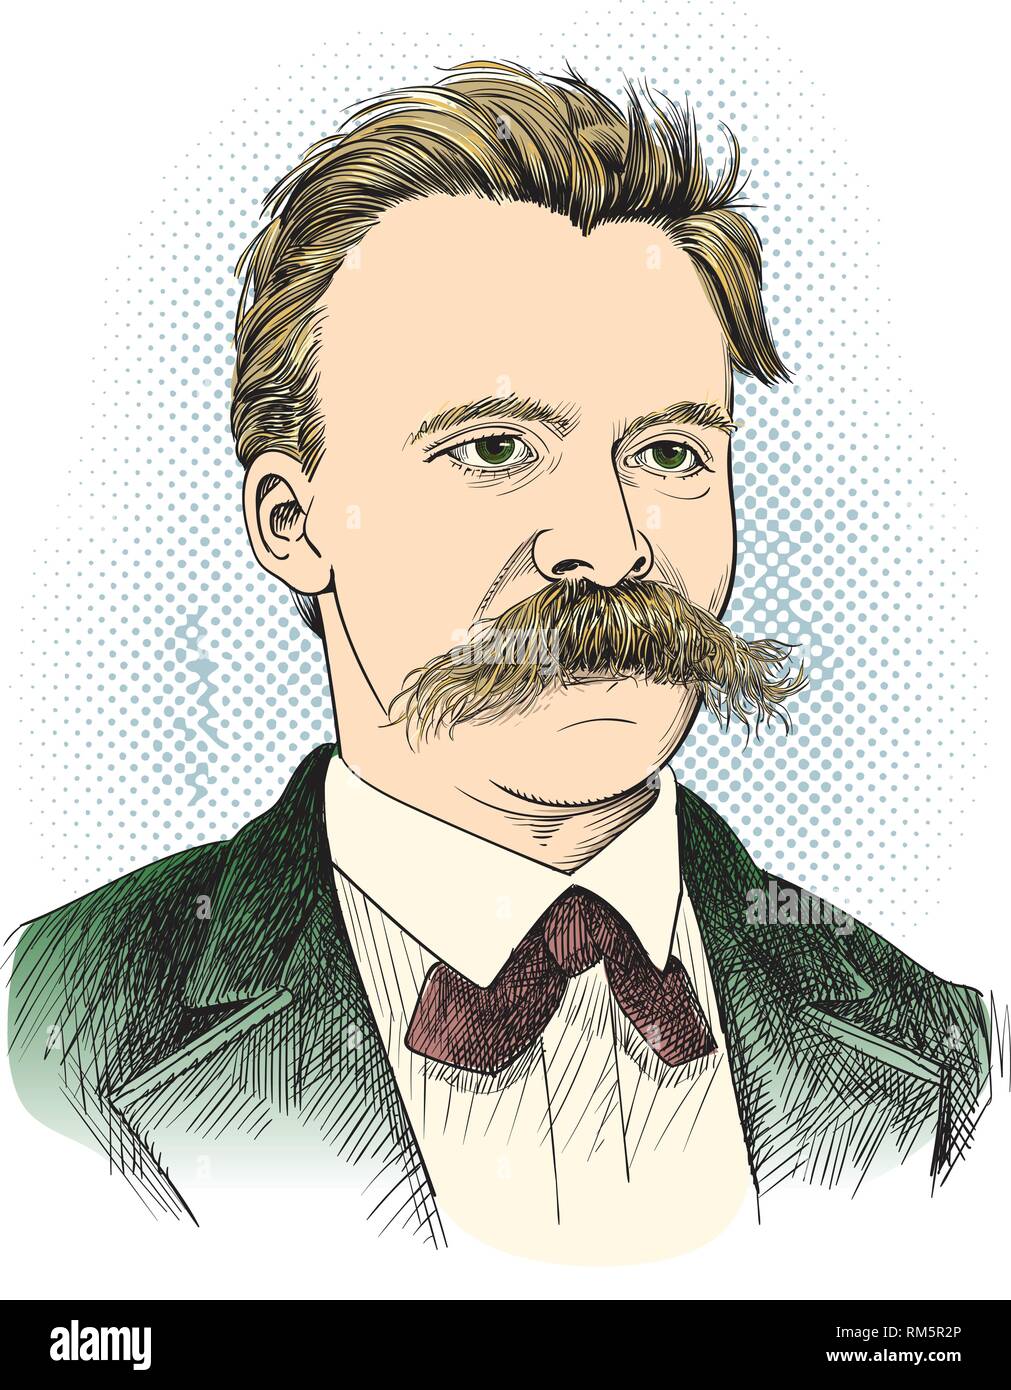 Friedrich Nietzsche Portrait im Einklang Art Illustration. Er war deutscher Philosoph, Philologe, Dichter, Komponist und klassischer Philologe. Bearbeitbare Layer. Stock Vektor